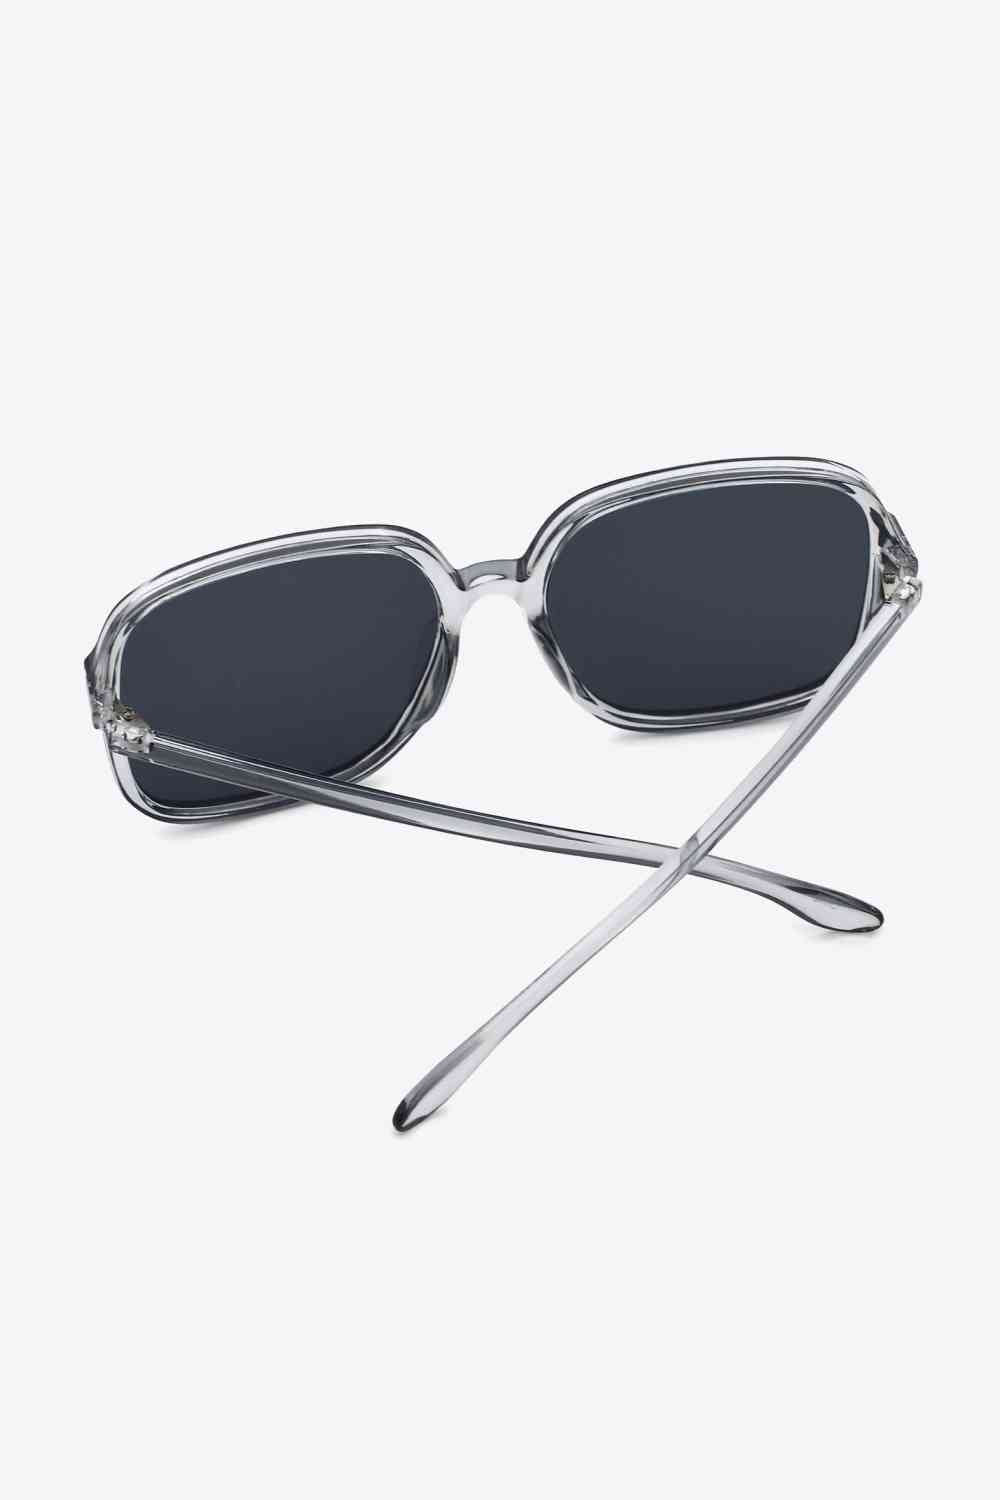 TEEK - Simply Square Style Sunglasses EYEGLASSES TEEK Trend   